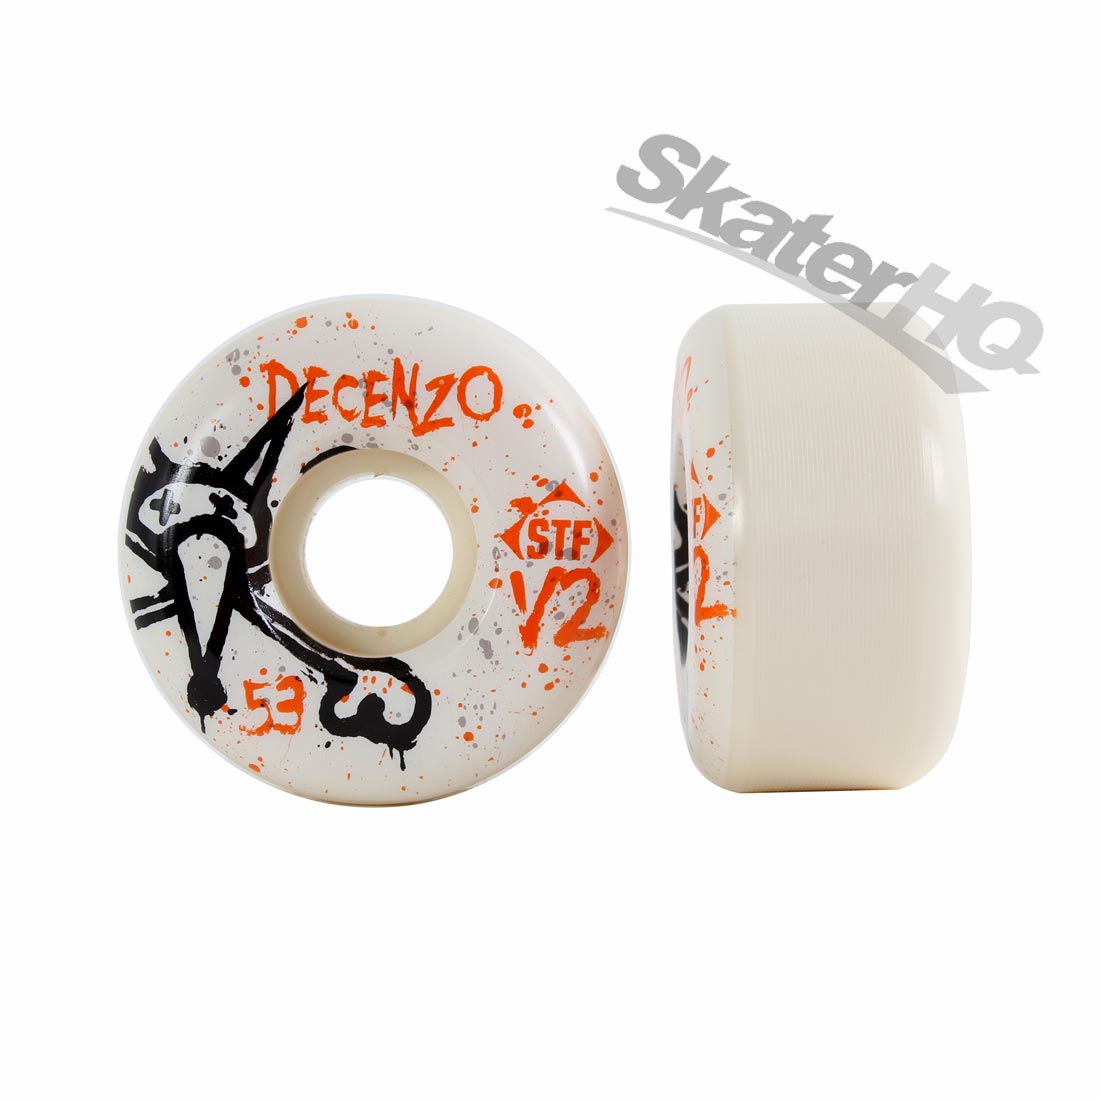 Bones Decenzo Vato V2 53mm Skateboard Wheels